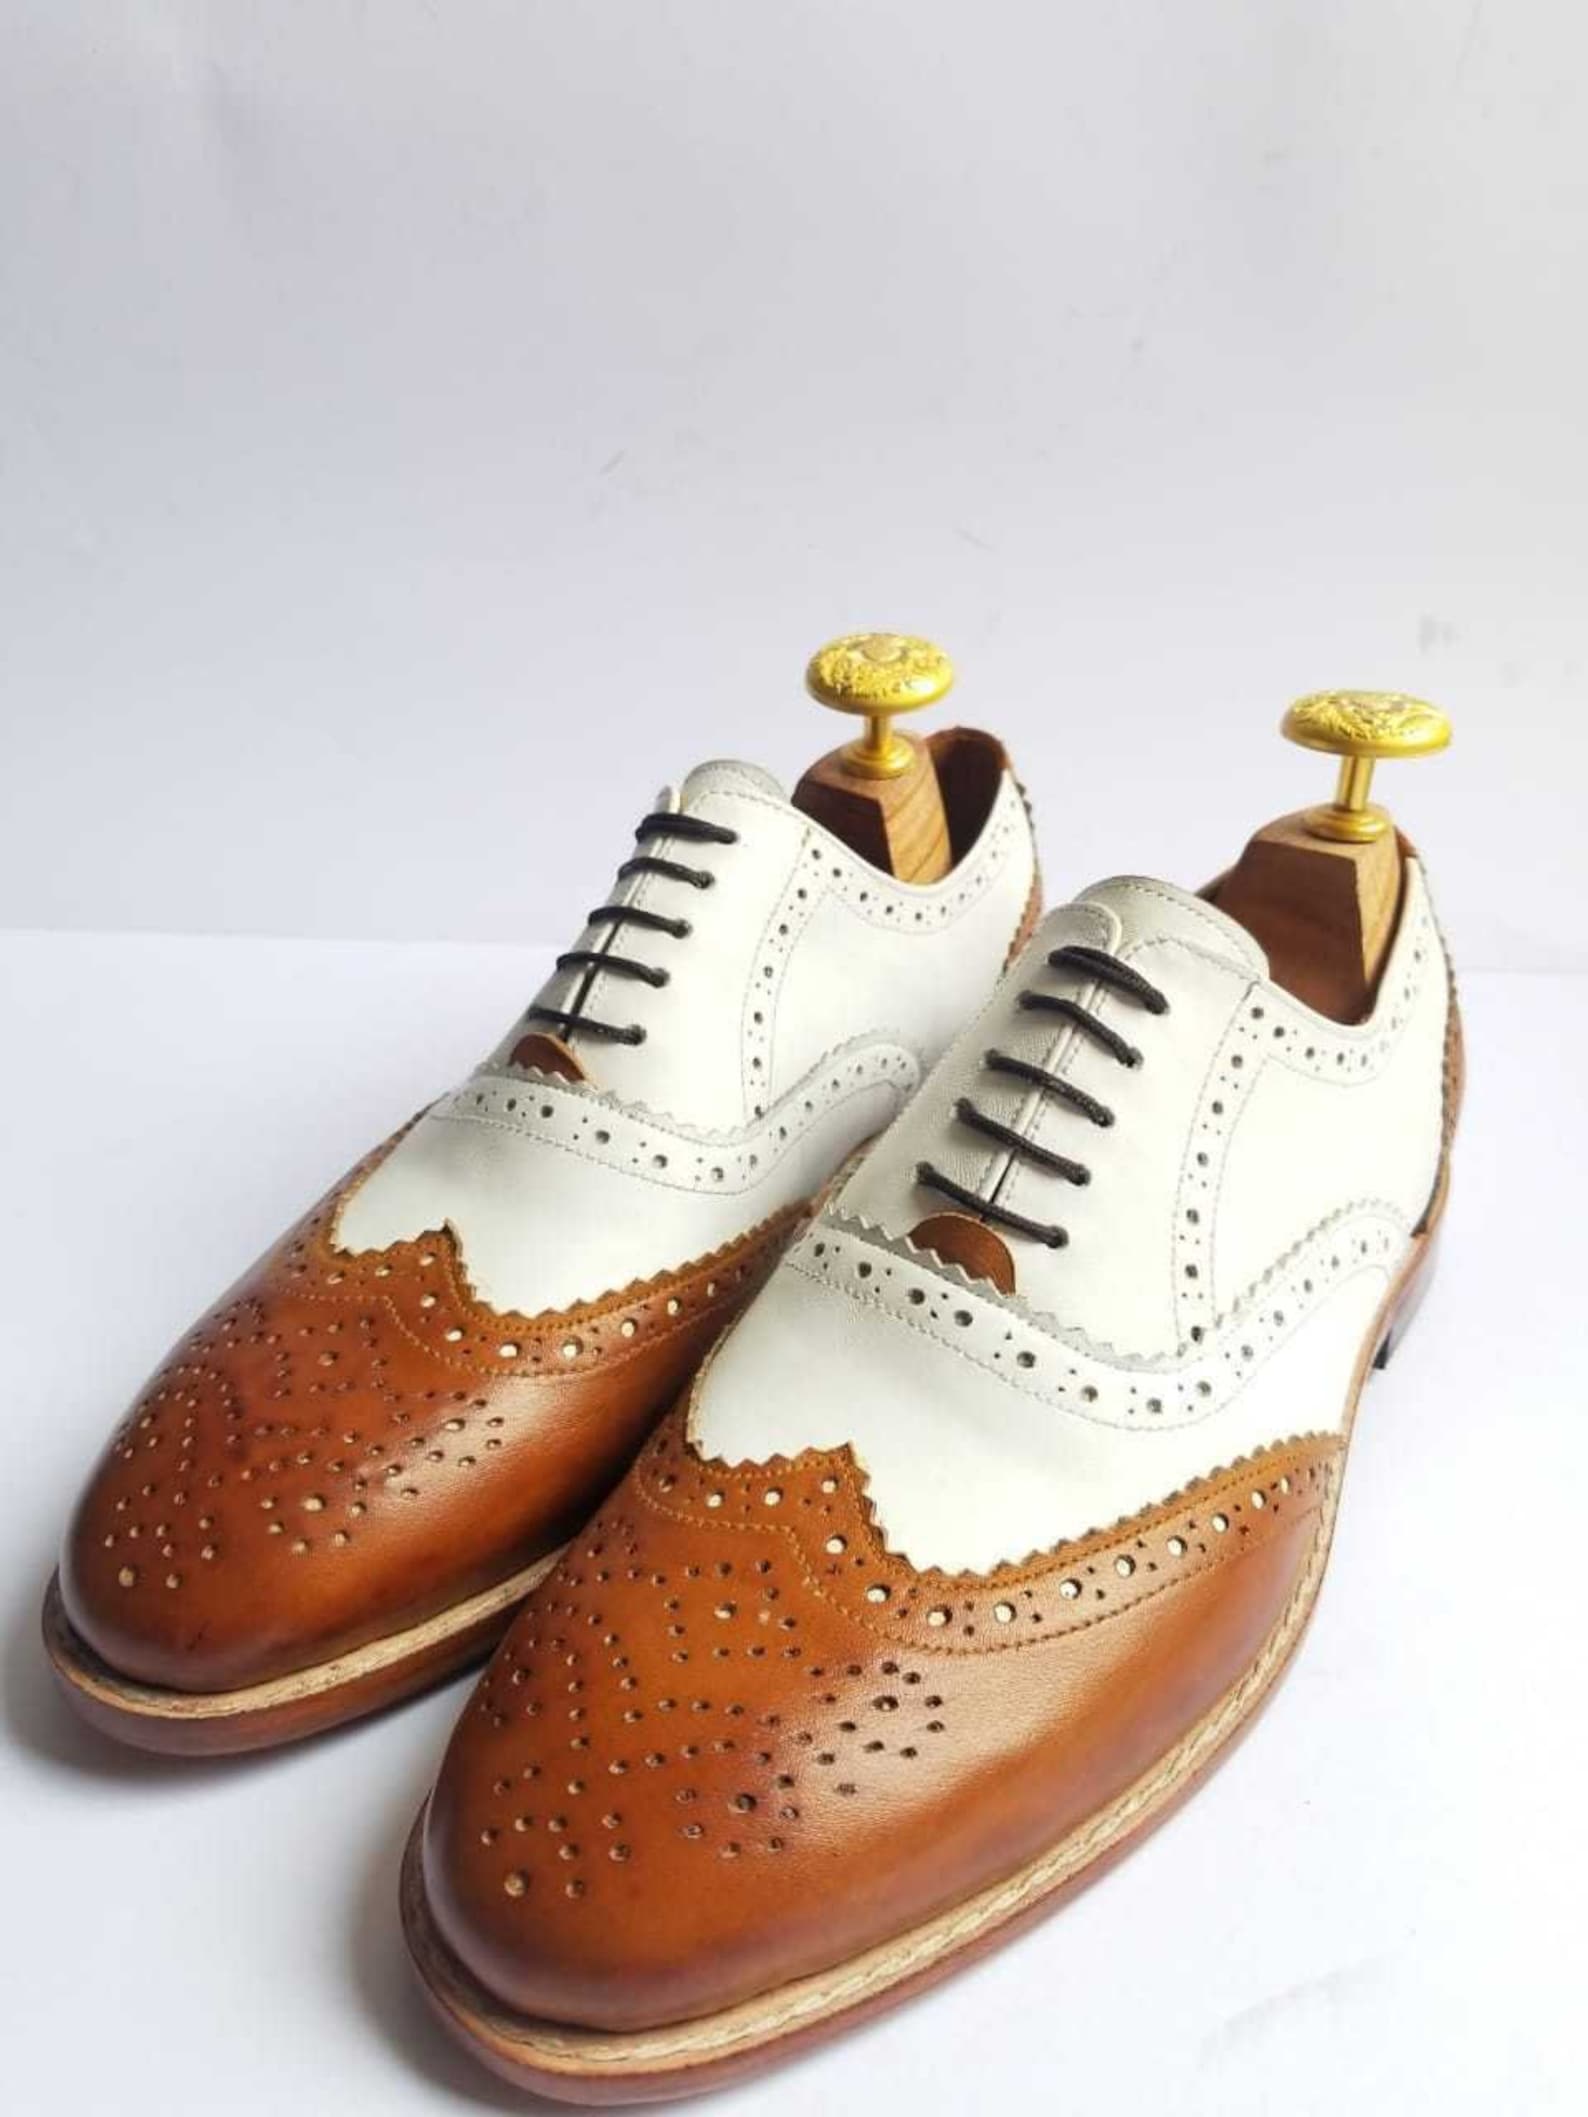 Handmade Men's Two Tone Brogue Oxford Shoes Tan & White | Etsy